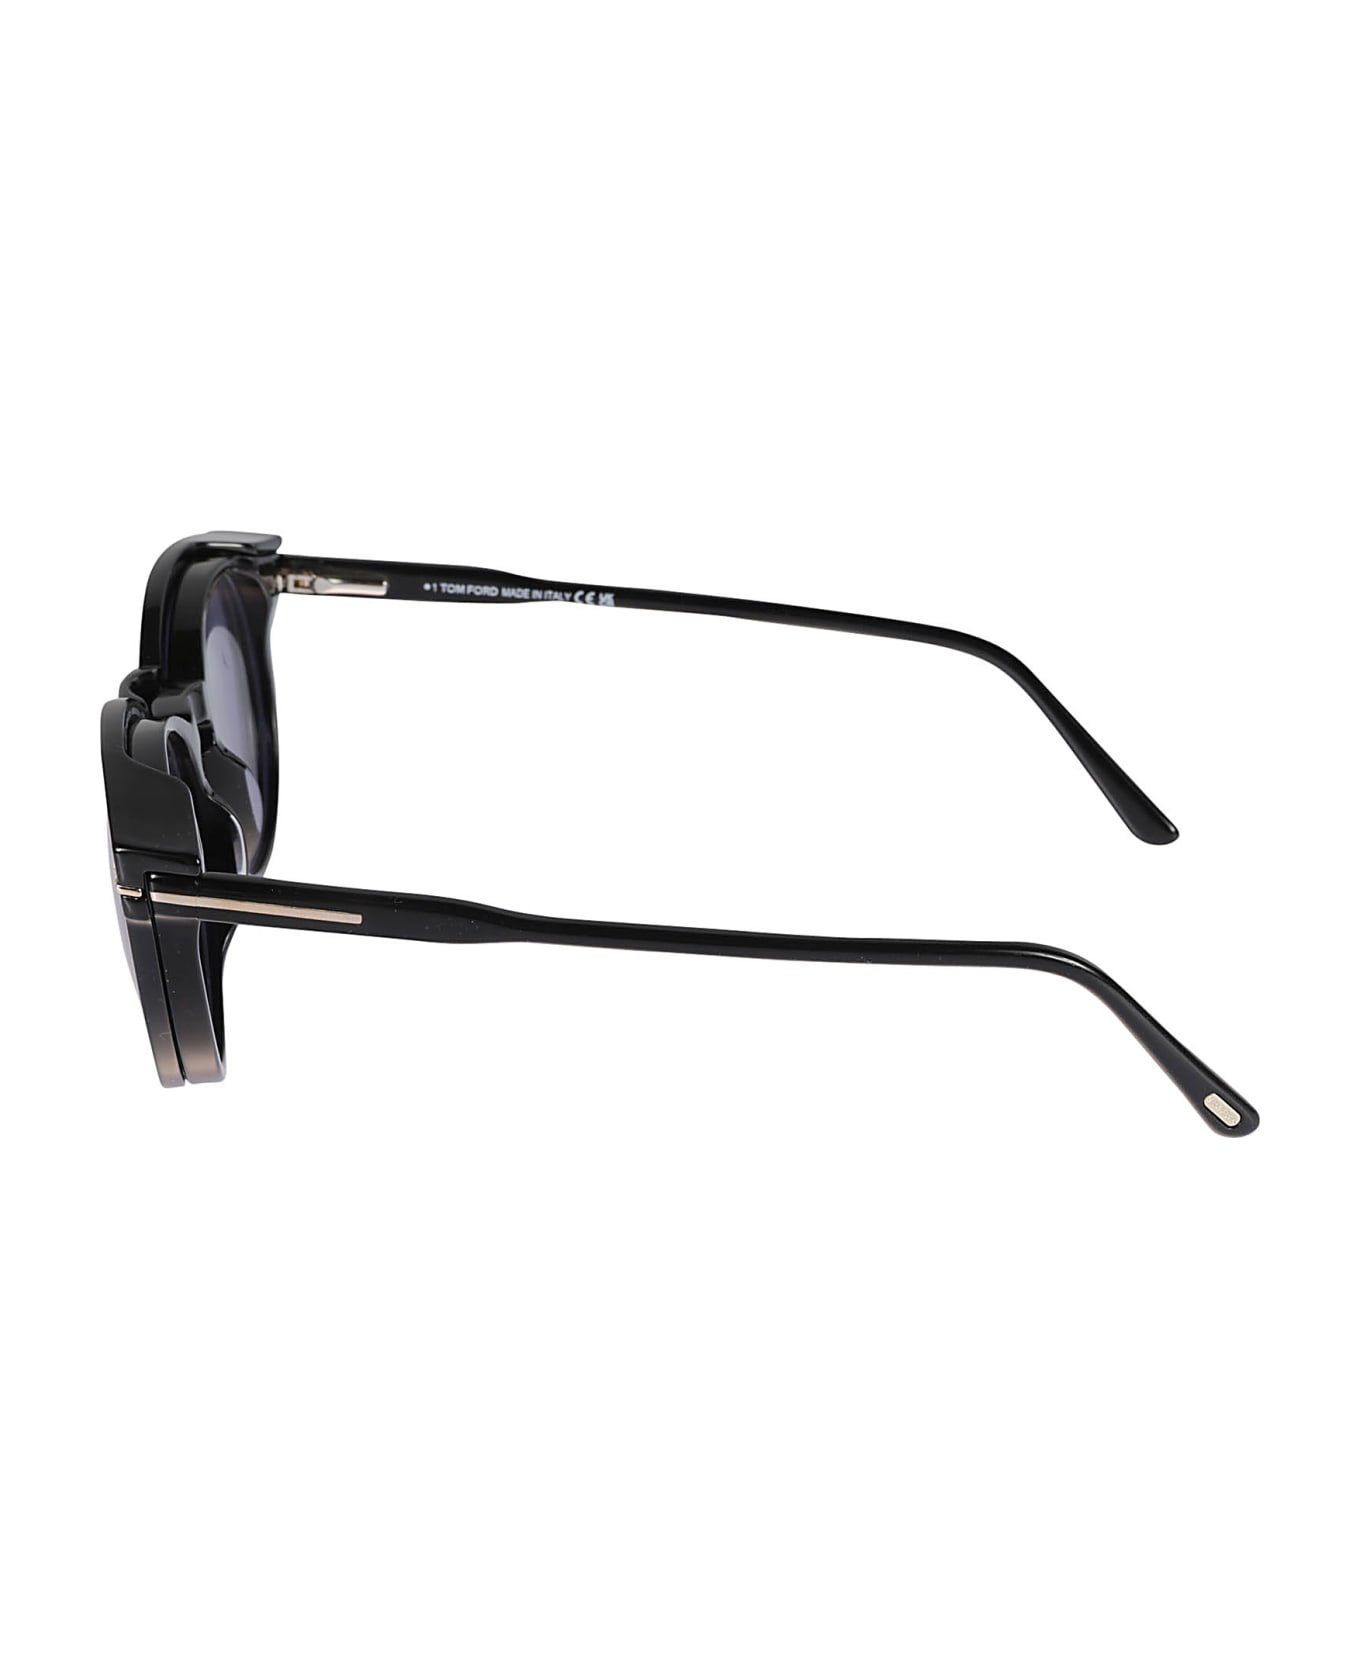 Tom Ford Eyewear Classic Round Lens Sunglasses cat-eye - 001